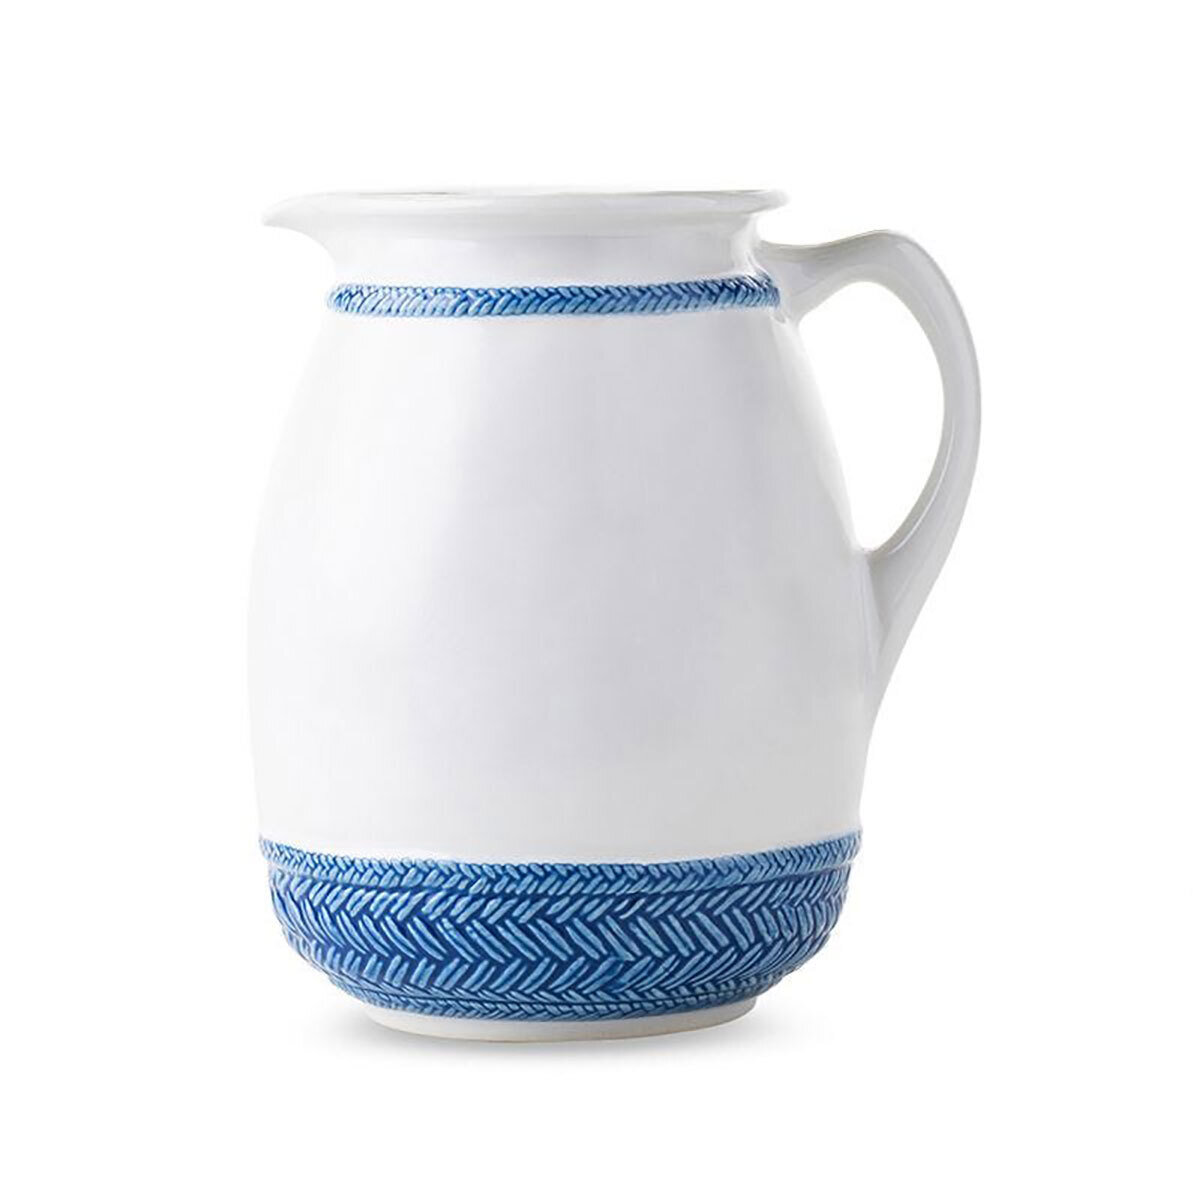 Juliska Le Panier Delft Blue Pitcher Vase KH13/44